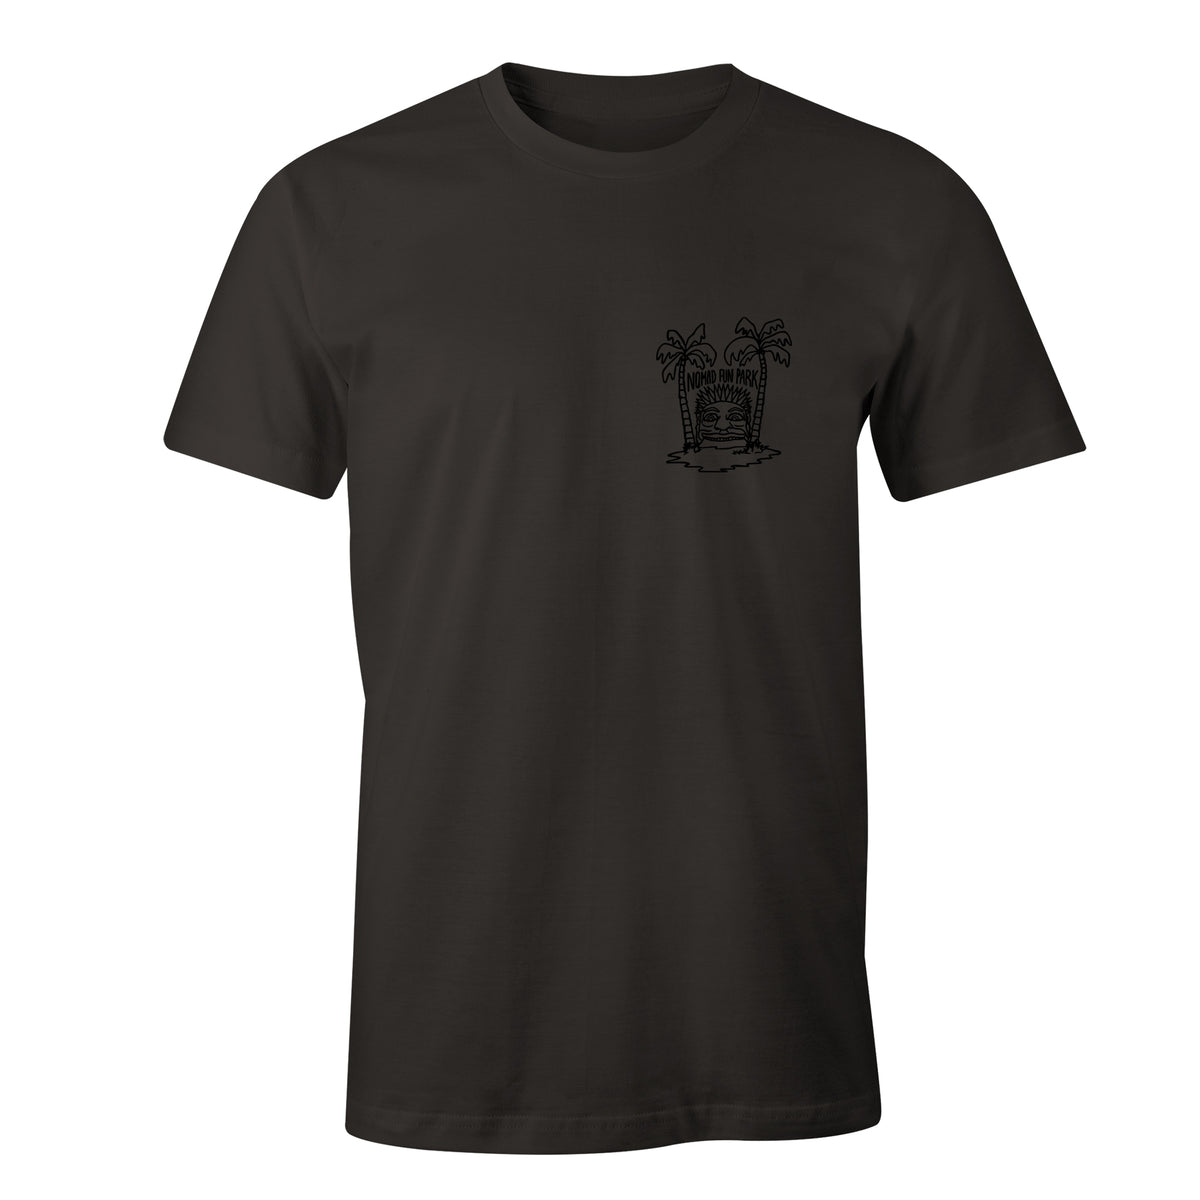 Nomad "FUN PARK" T-Shirt - Charcoal